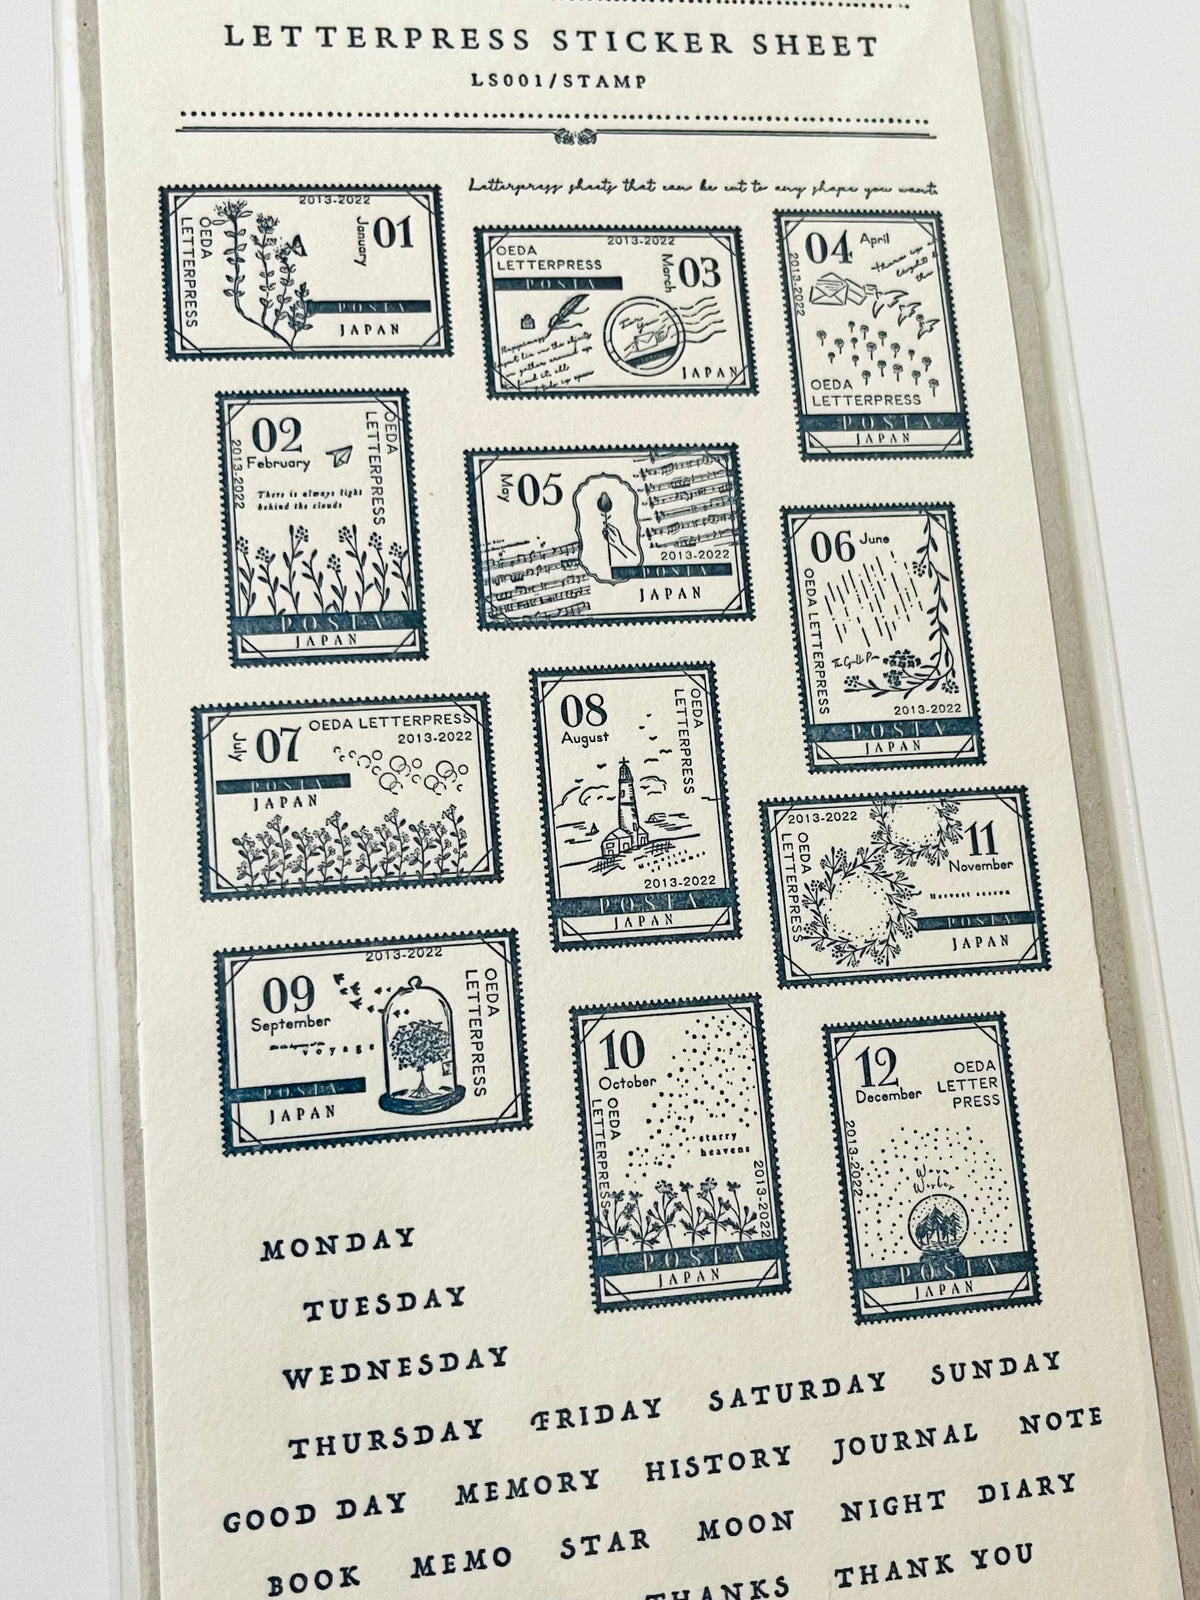 oeda letterpress: uncut stamp style (last stock)